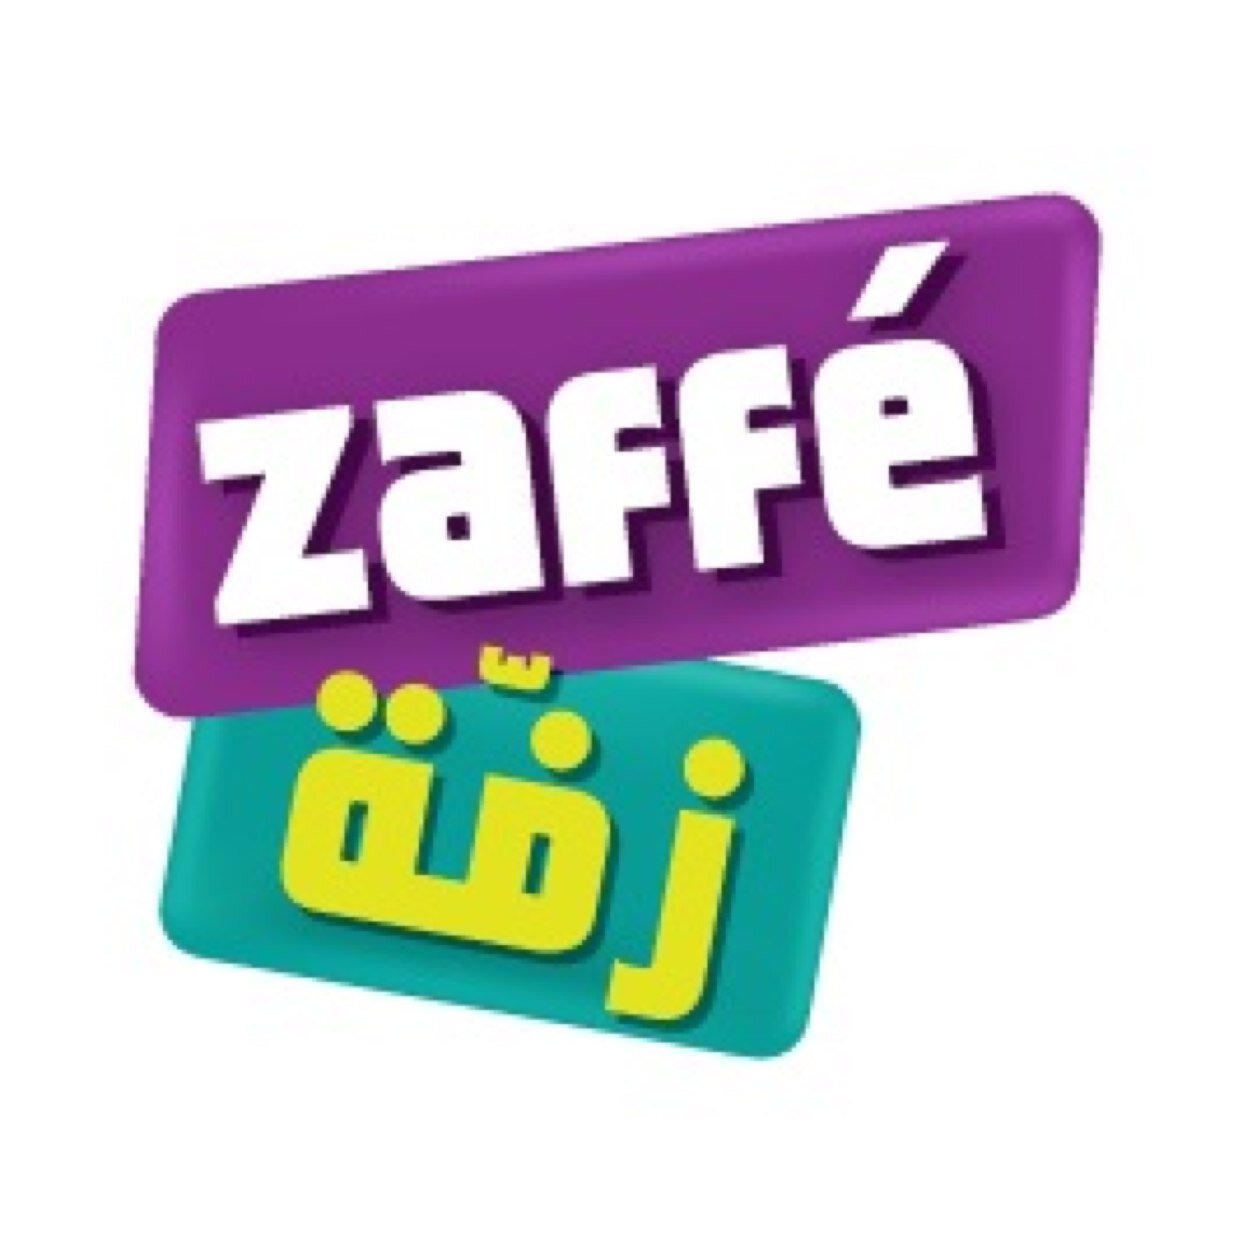 Zaffe Official Twitter Account. Written By @mayasouhaid Directed By @hanikhashfeh Producer @pierrerabbat @MTVLebanon http://t.co/FN2CIhbj4P